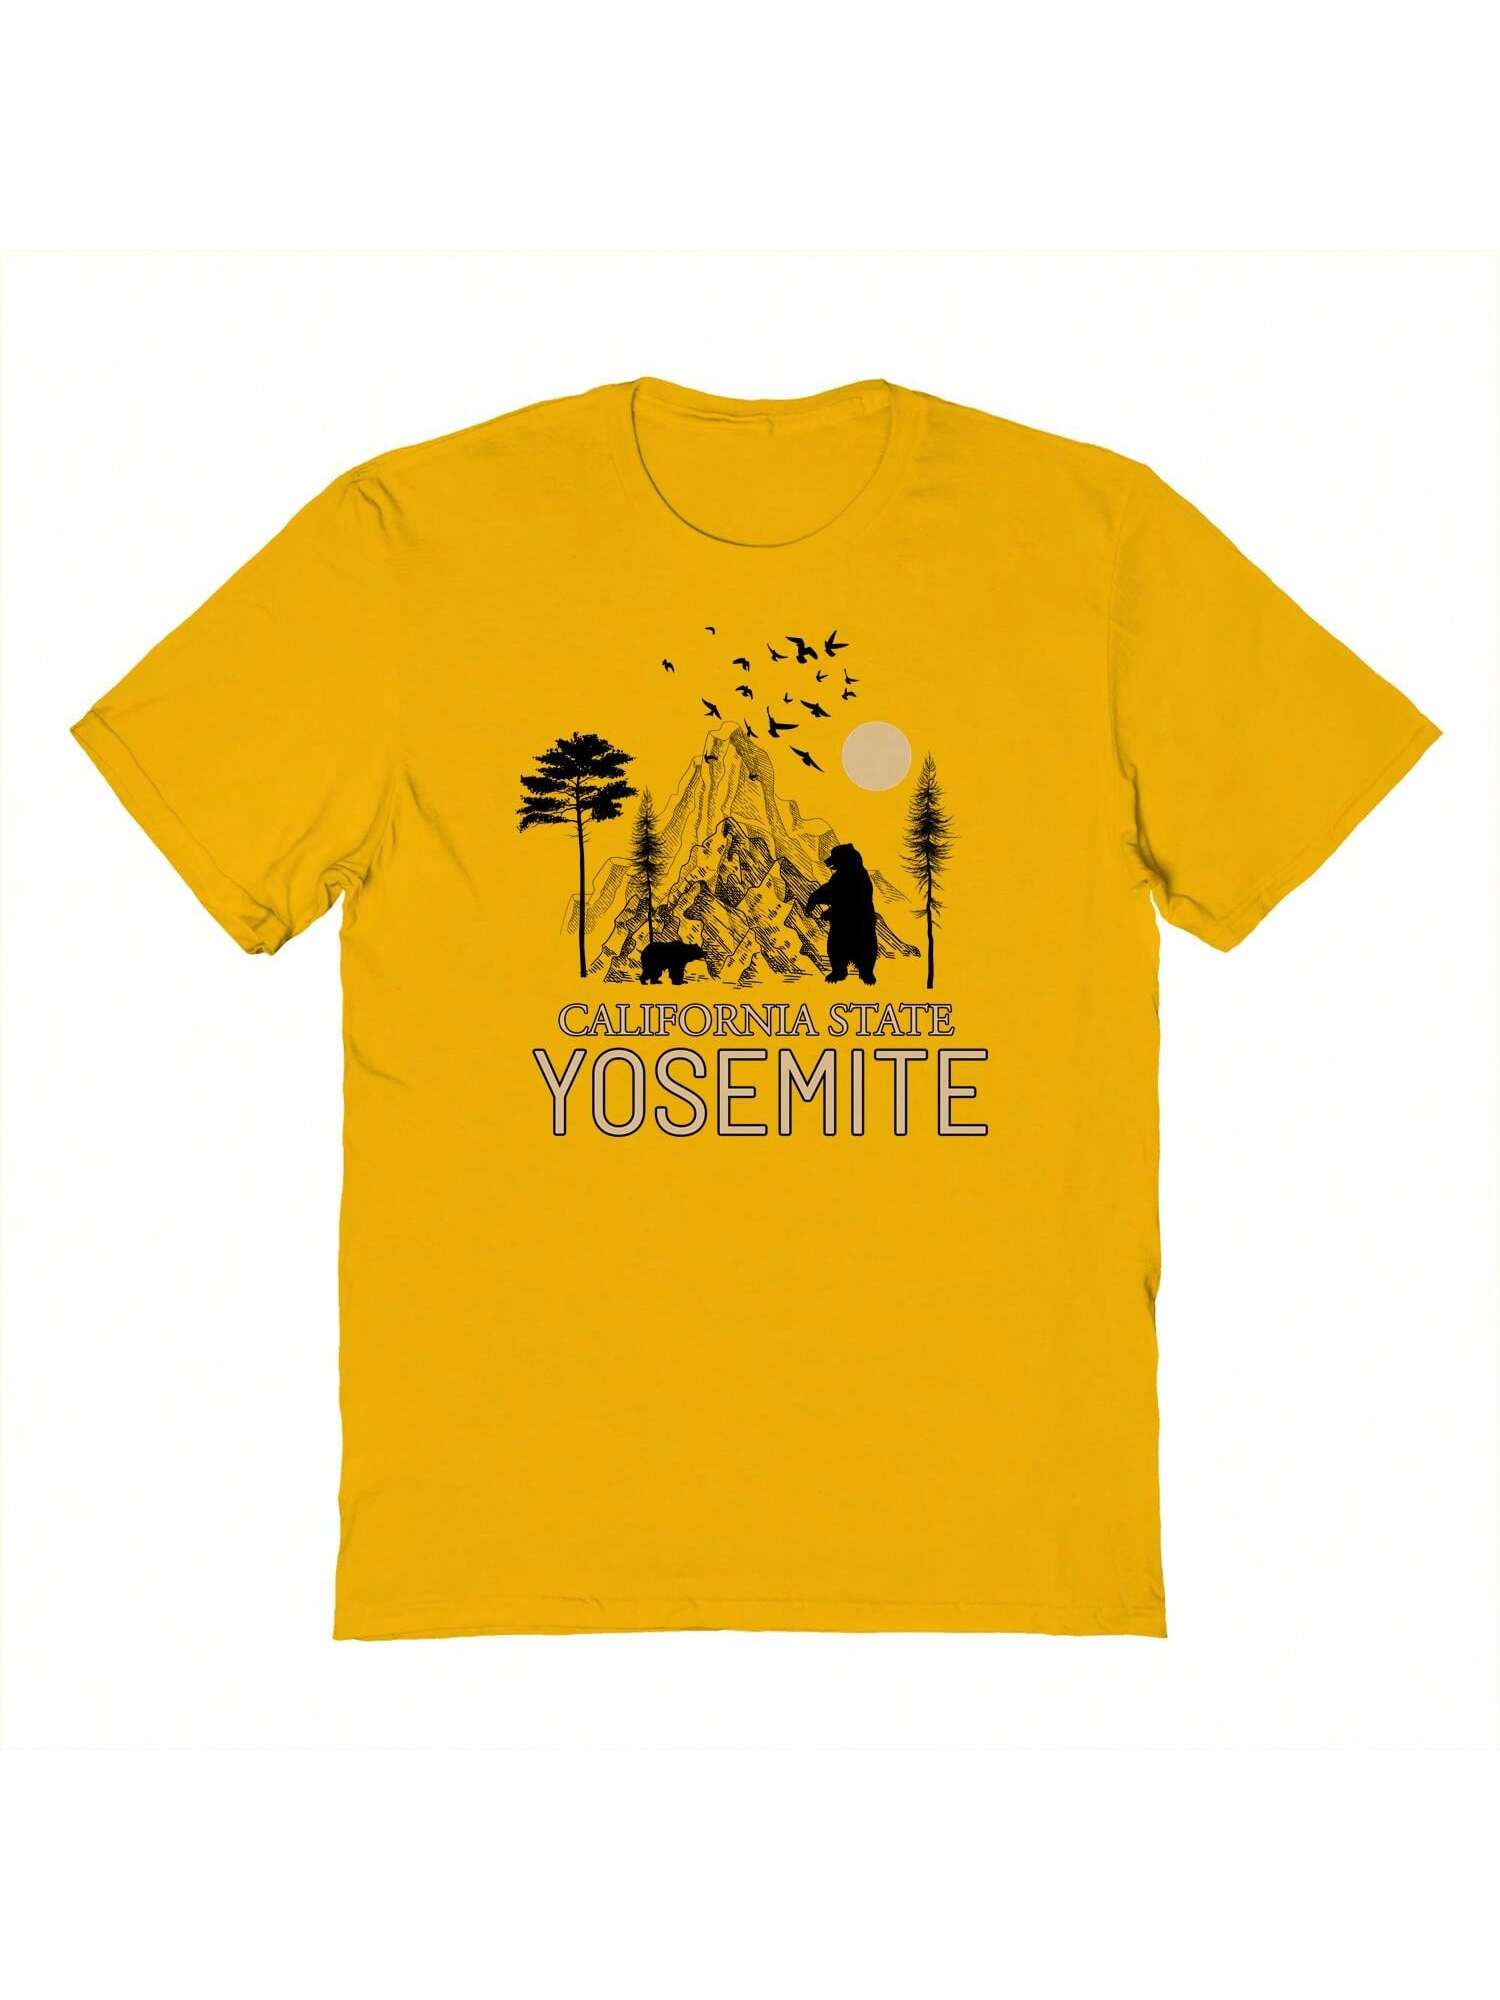 Мужская хлопковая футболка с короткими рукавами Country Parks California State Yose Mite Graphic Sand, золото мужская хлопковая футболка с короткими рукавами country parks california state yose mite graphic sand бежевый